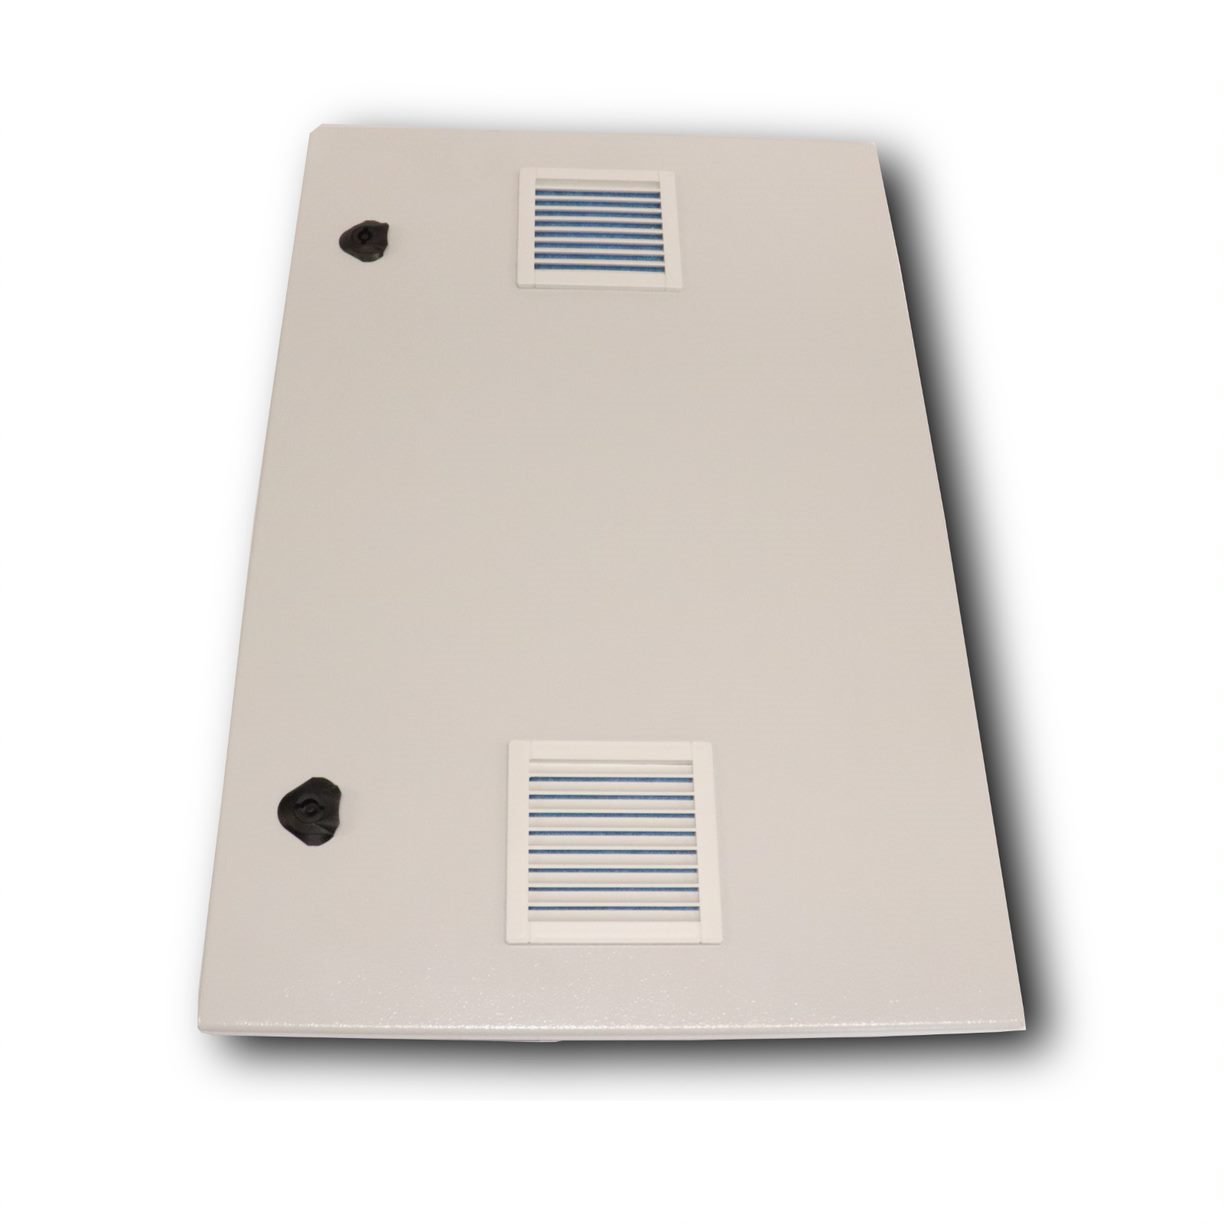 PSS* Compact Outdoor Enclosure IP54 Vented Door For MSB.303020 (1 x Vent)